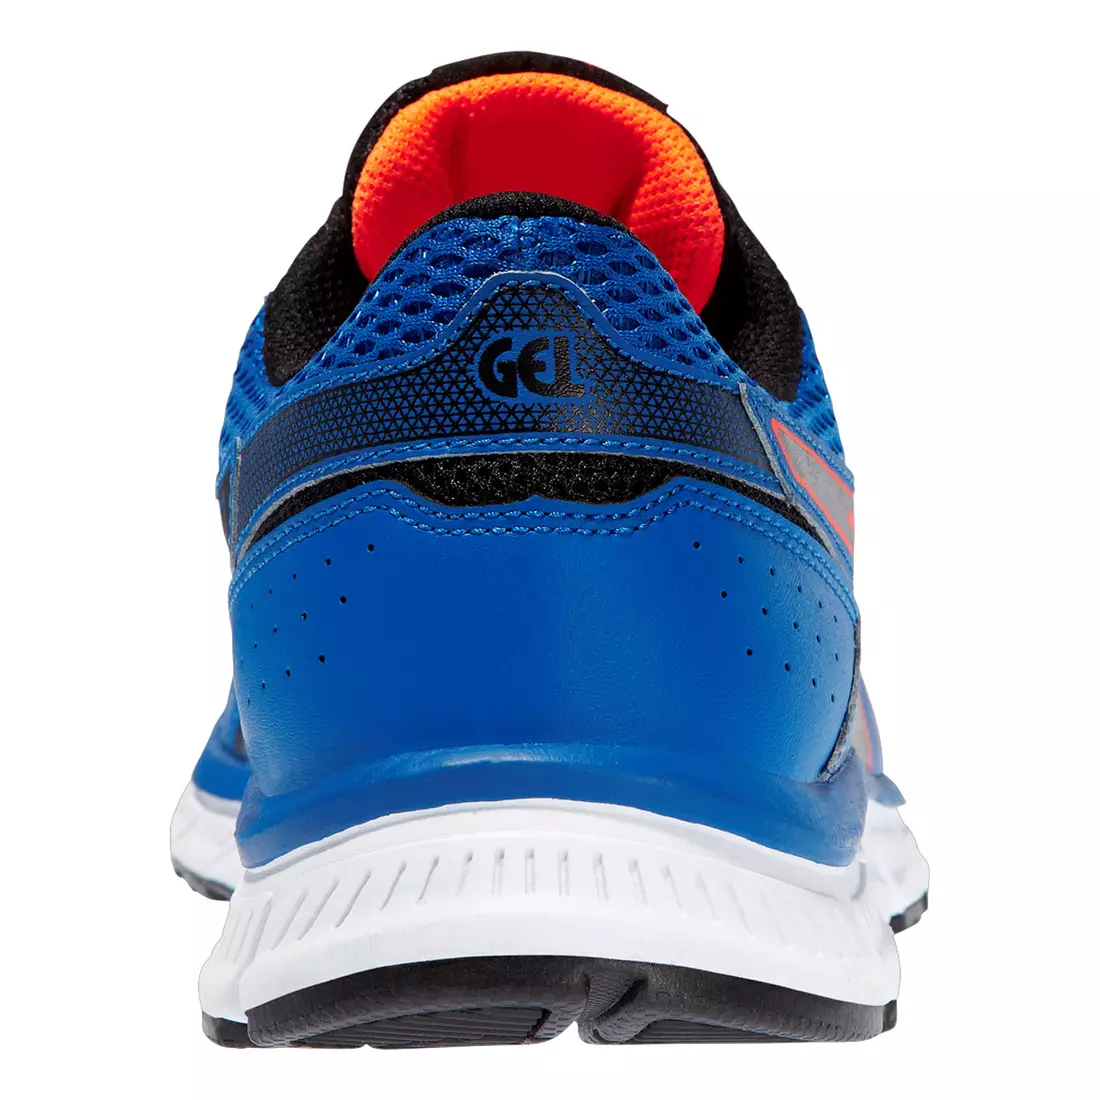 ASICS GEL-UNIFIRE running shoes 4299